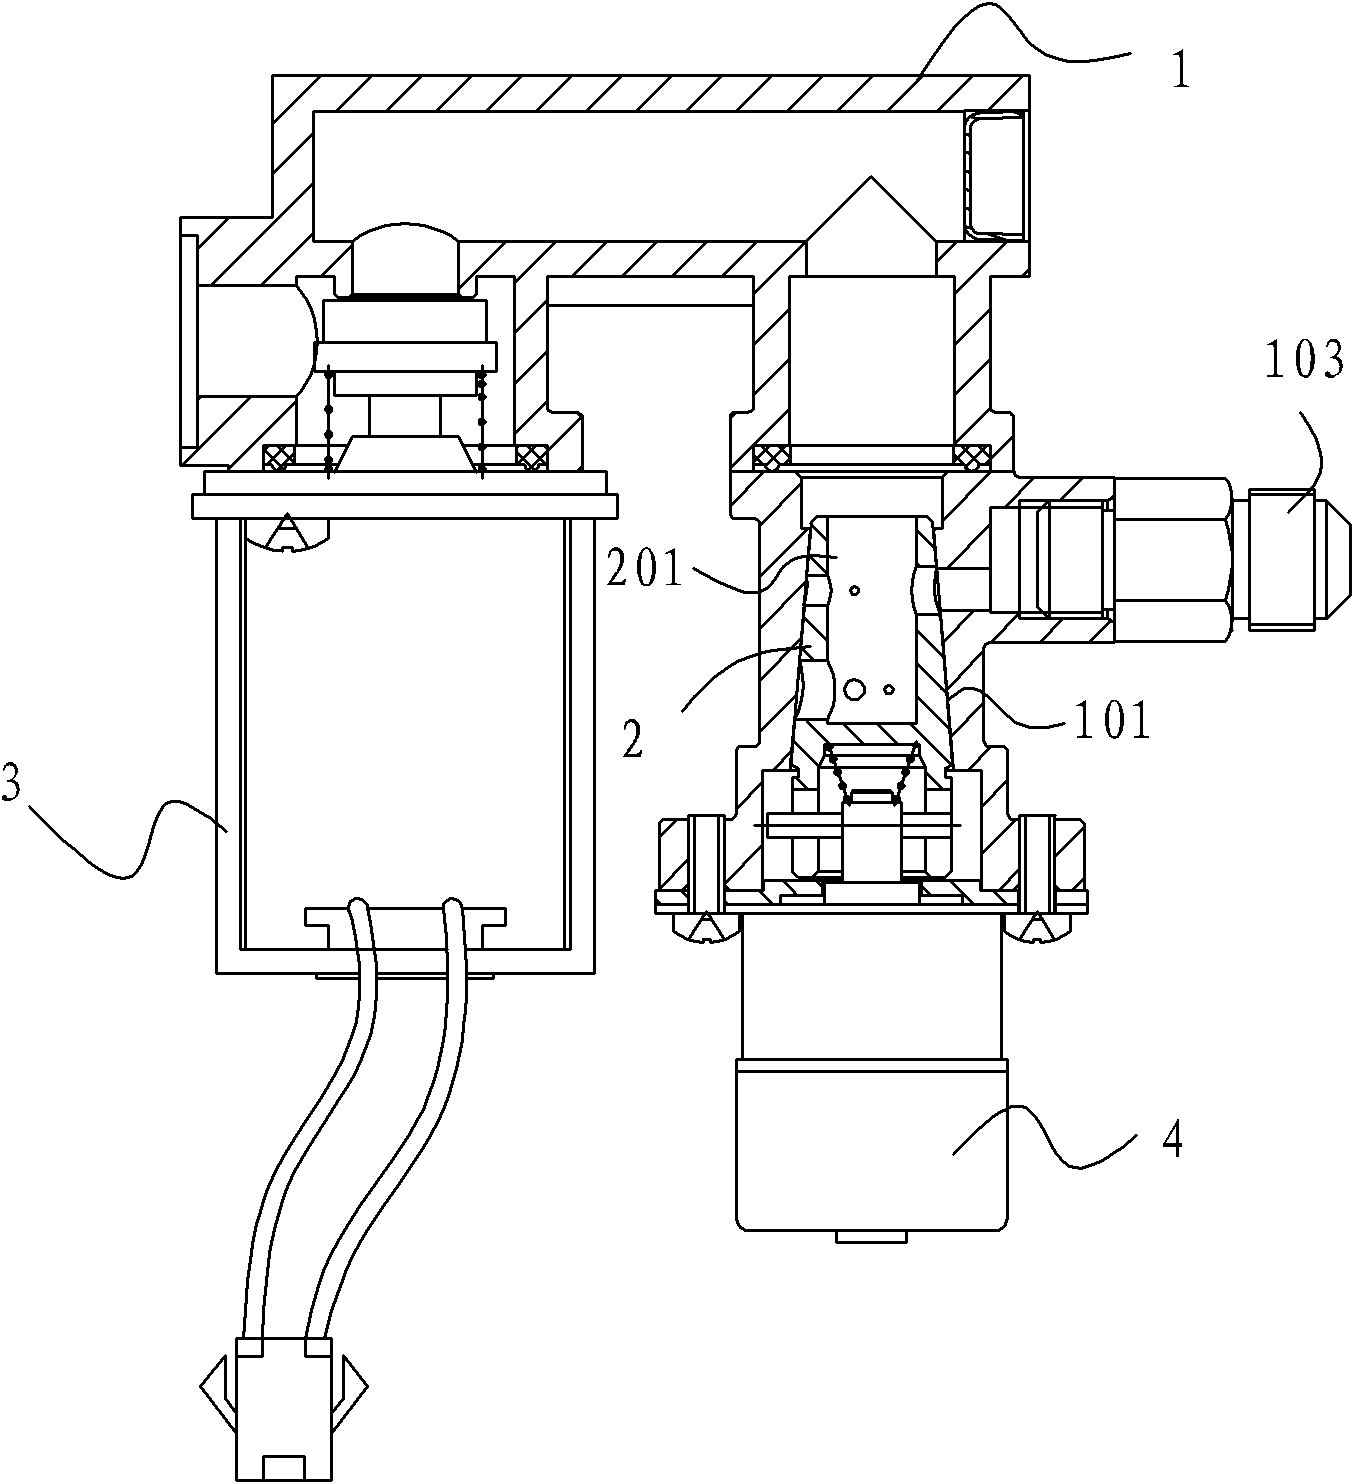 Steplessly adjustable electric control gas valve